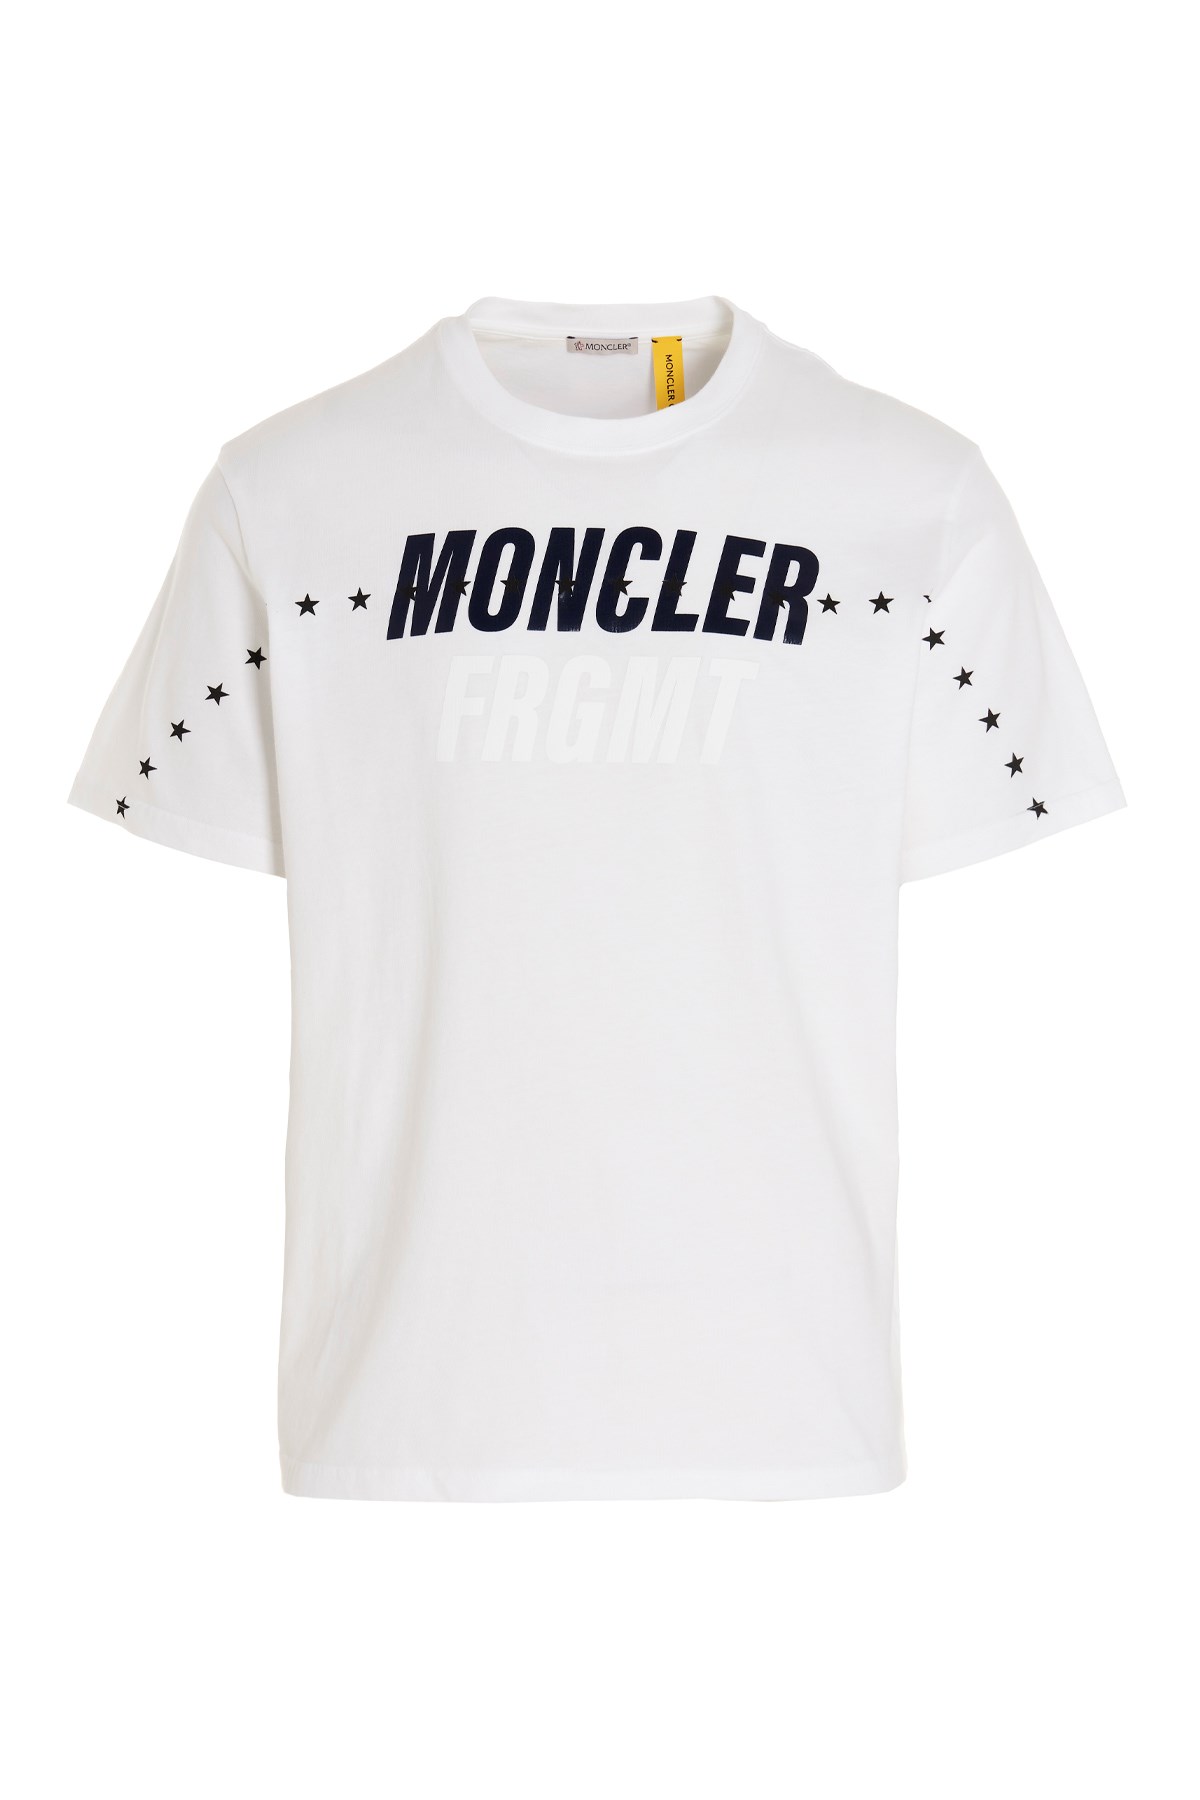 MONCLER GENIUS Moncler Genius X Fragment T-Shirt